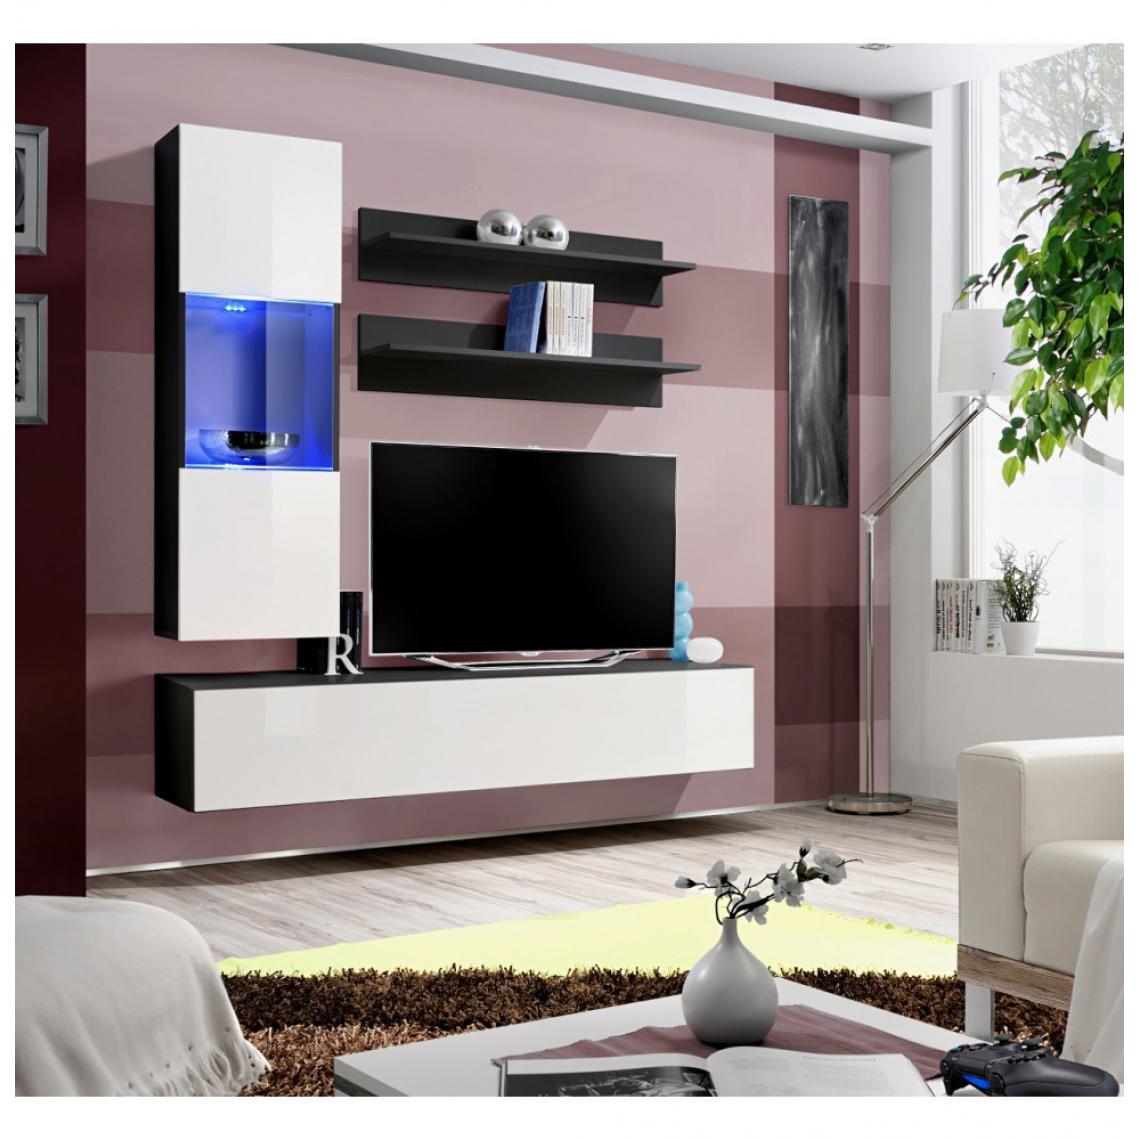 Ac-Deco - Ensemble meuble TV mural - Fly II - 160 cm x 170 cm x 40 cm - Noir et blanc - Meubles TV, Hi-Fi